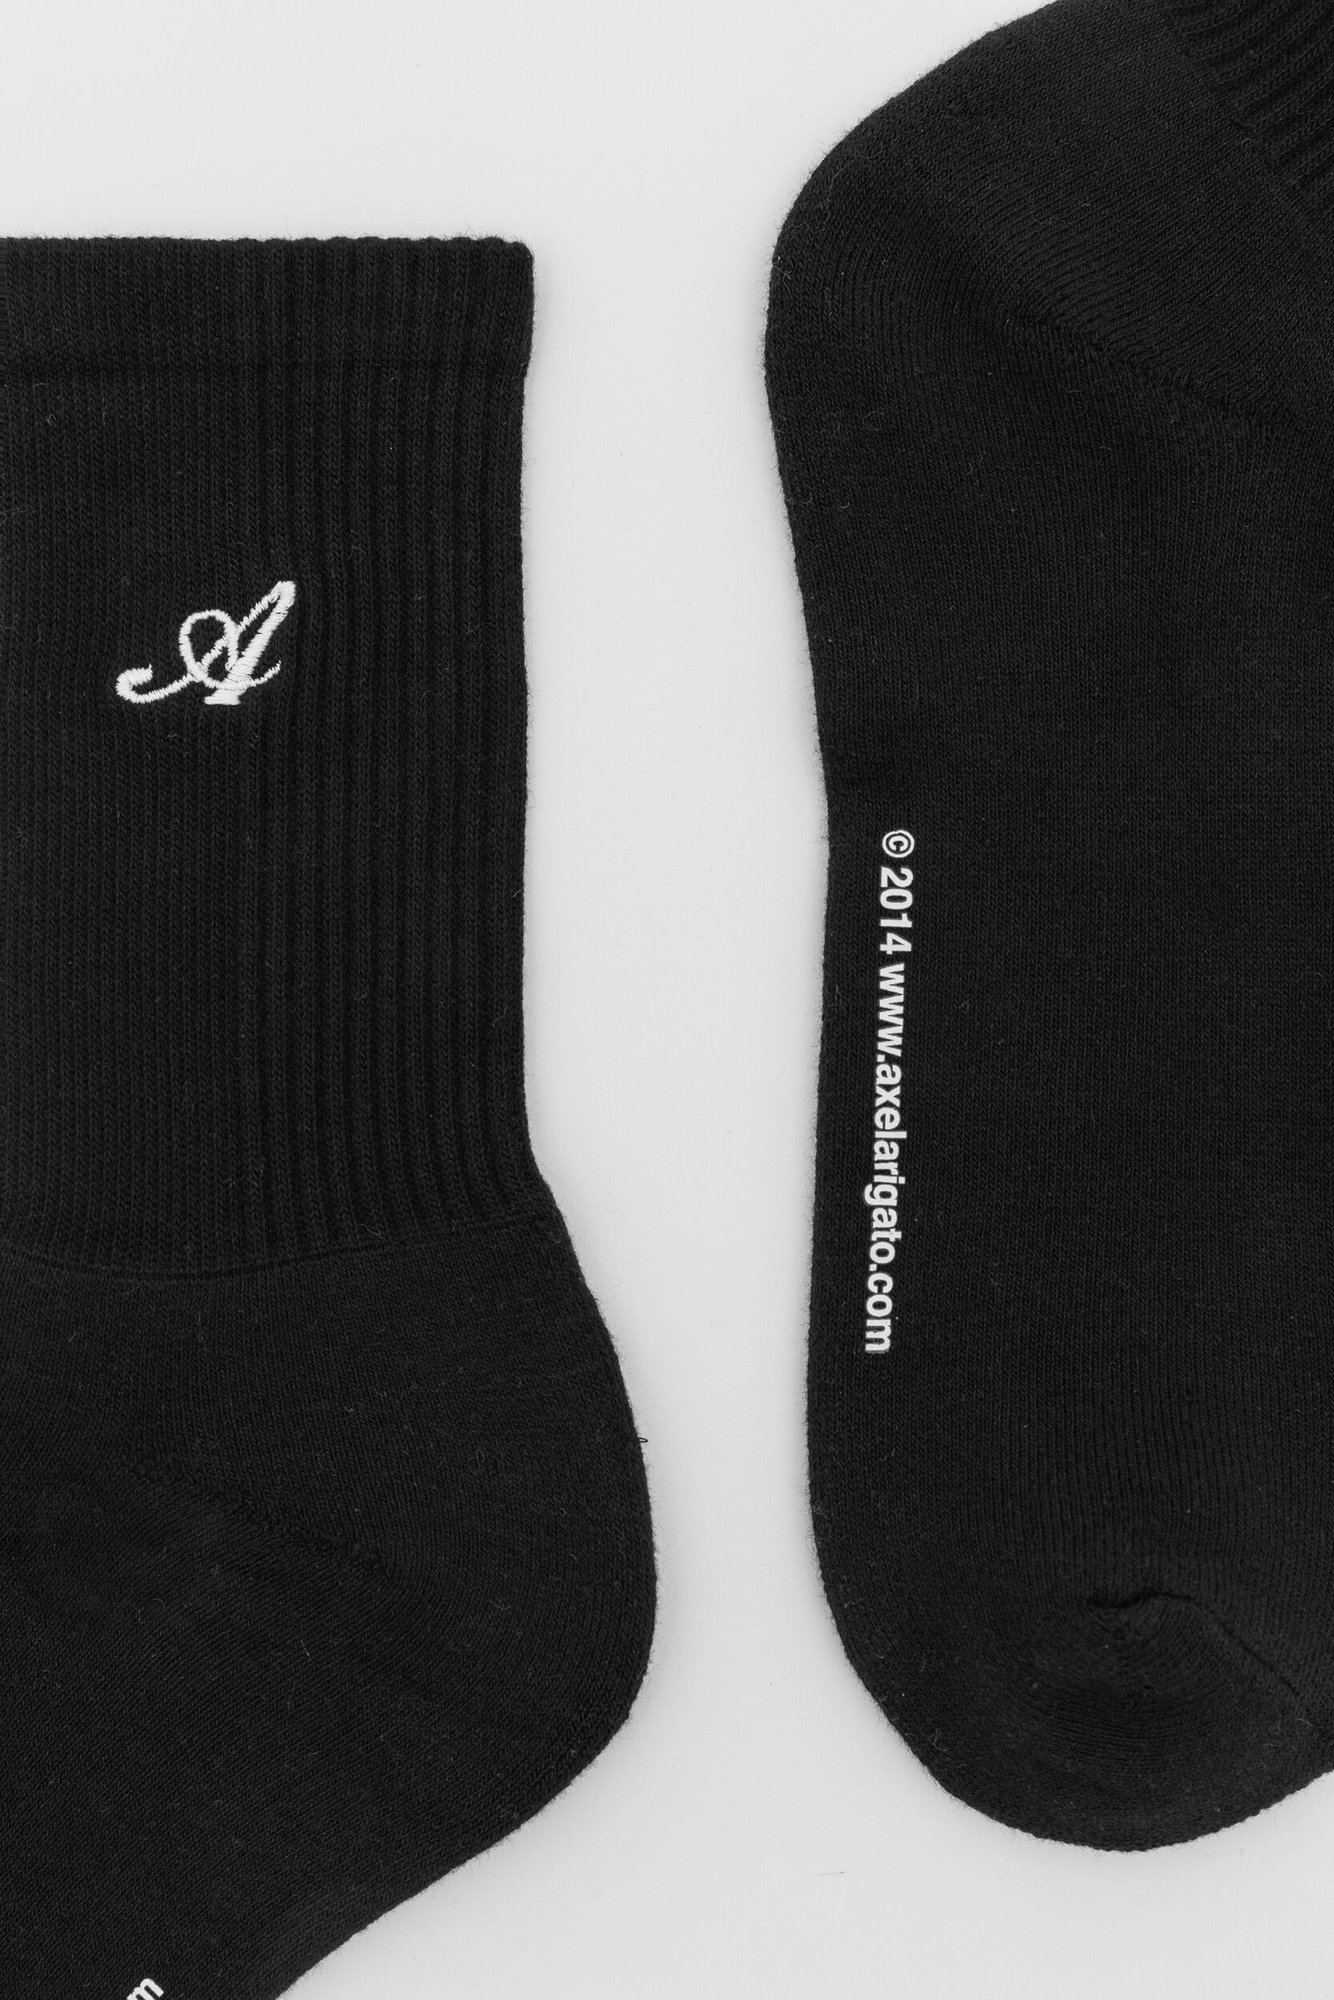 Signature Sport Socks